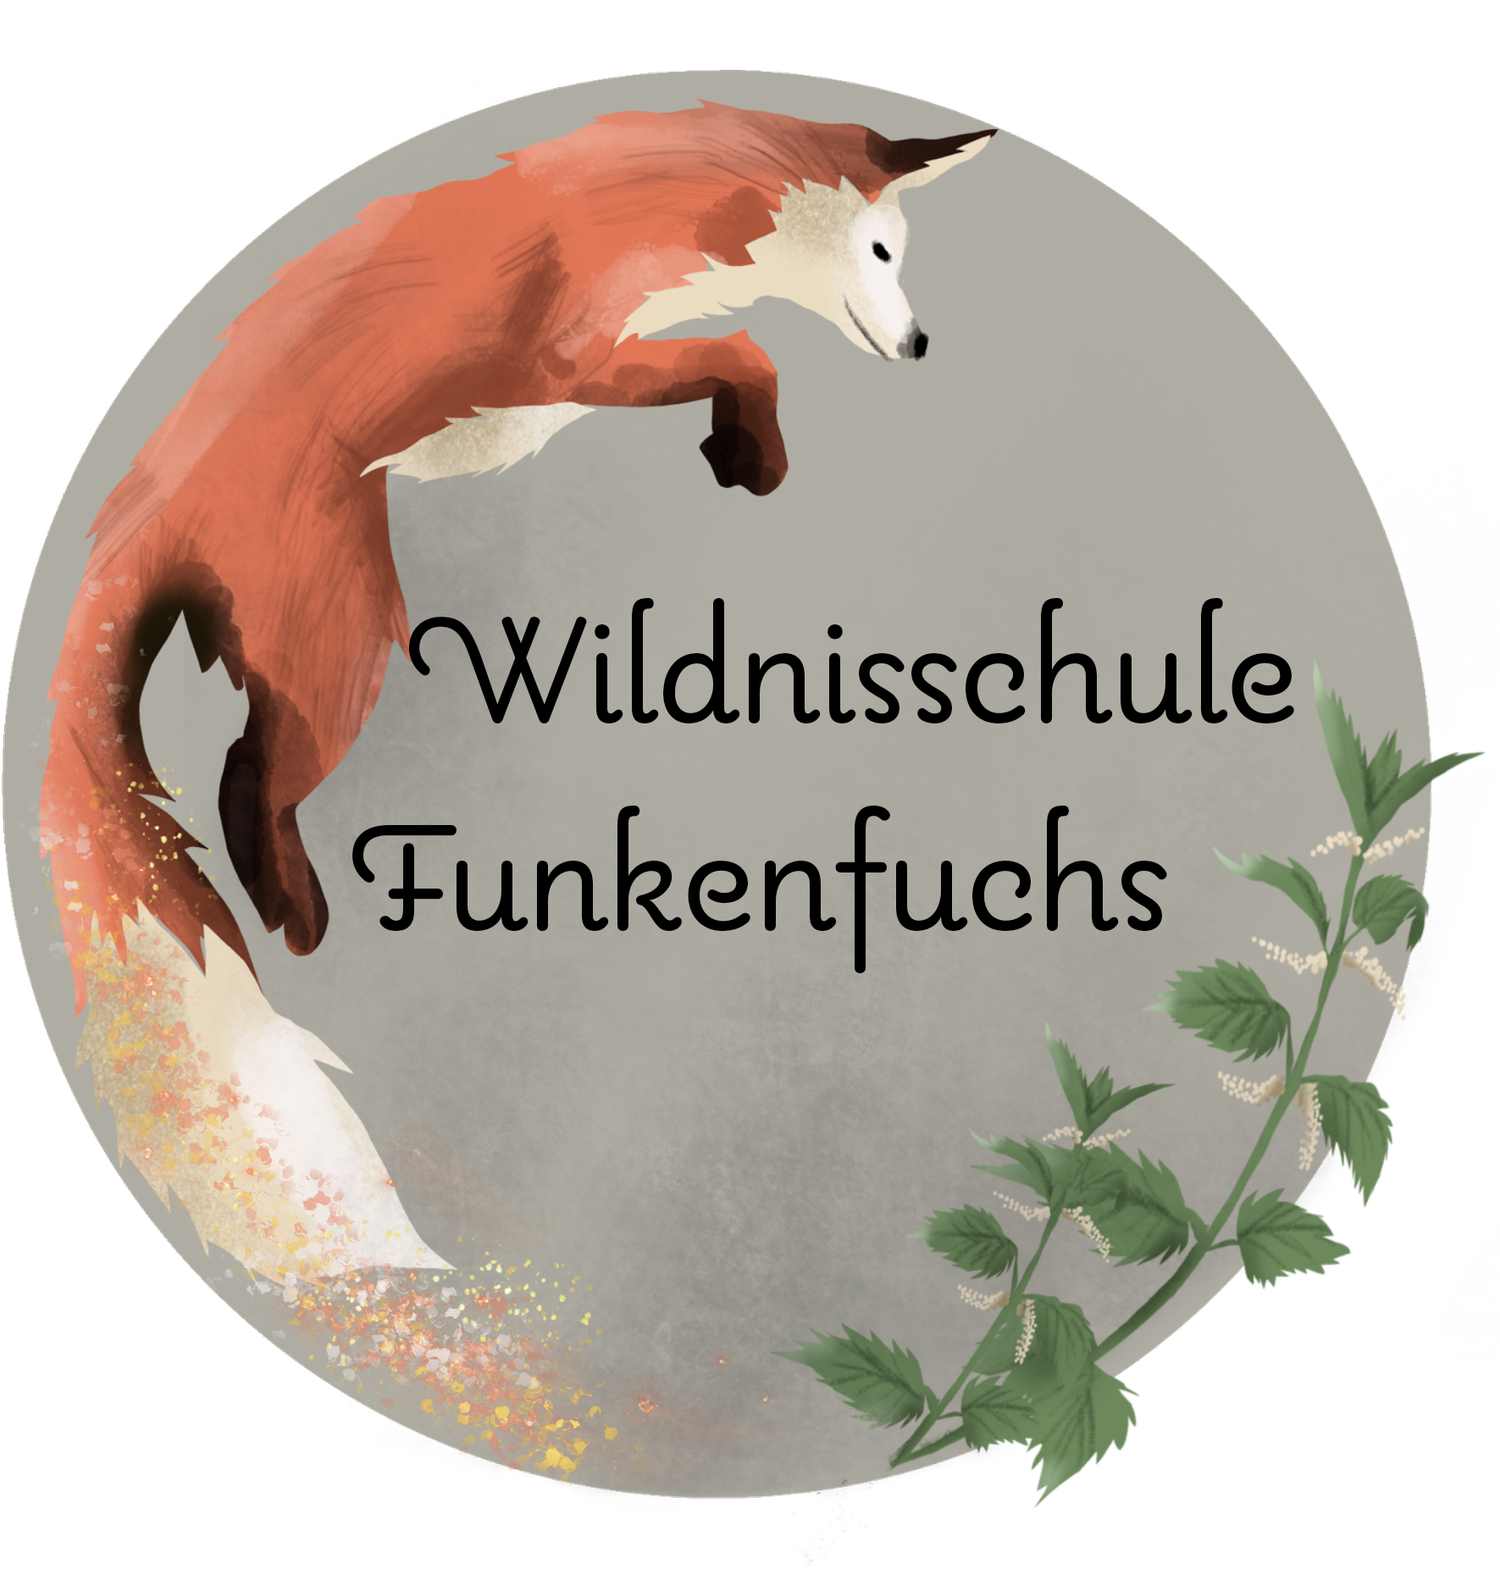 Logo of the wilderness school Wildnisschule Funkenfuchs